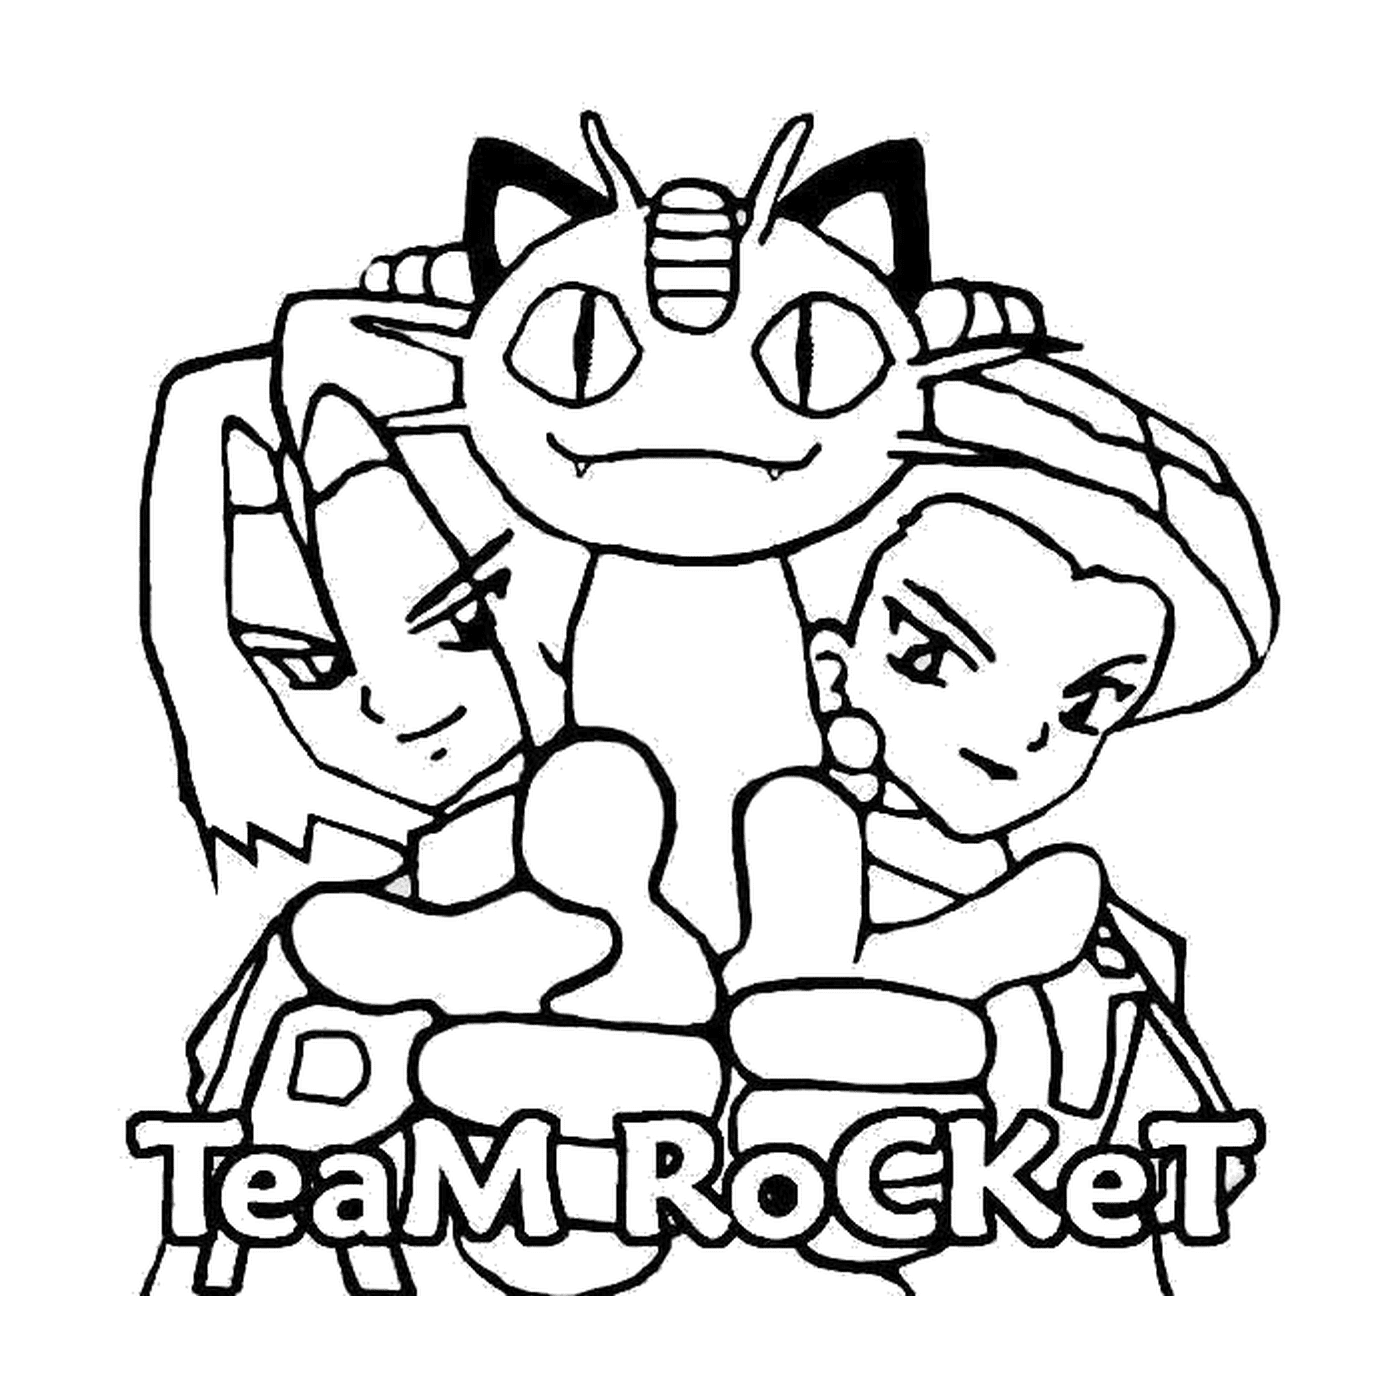  Team Rocket : Group of bad guys 